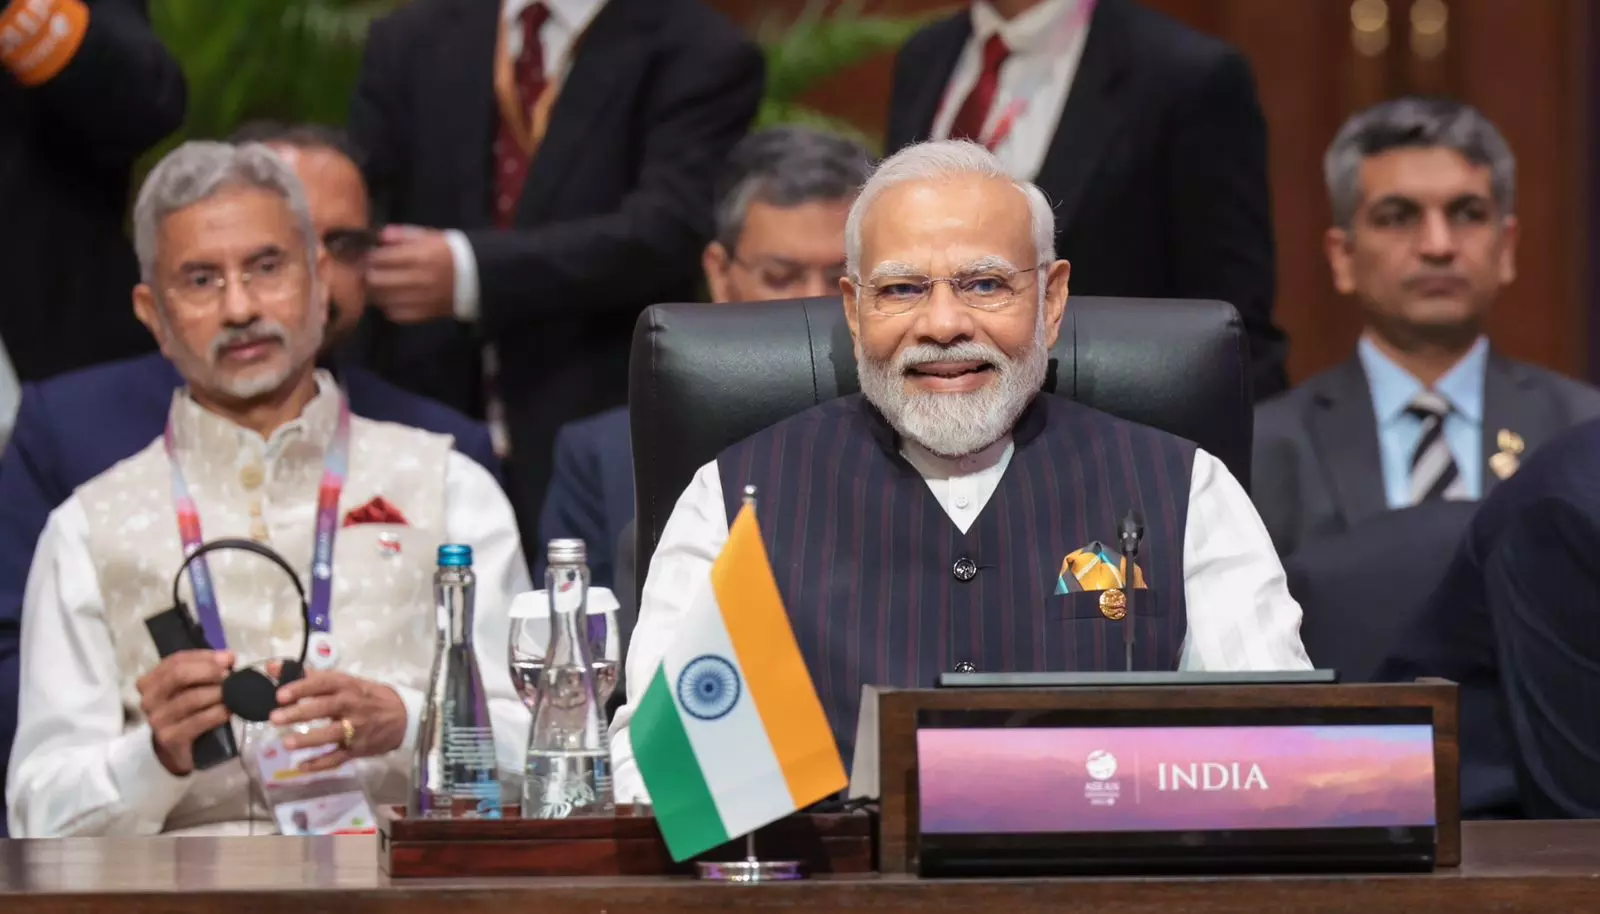 Indias G20 presidency strives to bridge divides, encourage collaboration: Modi